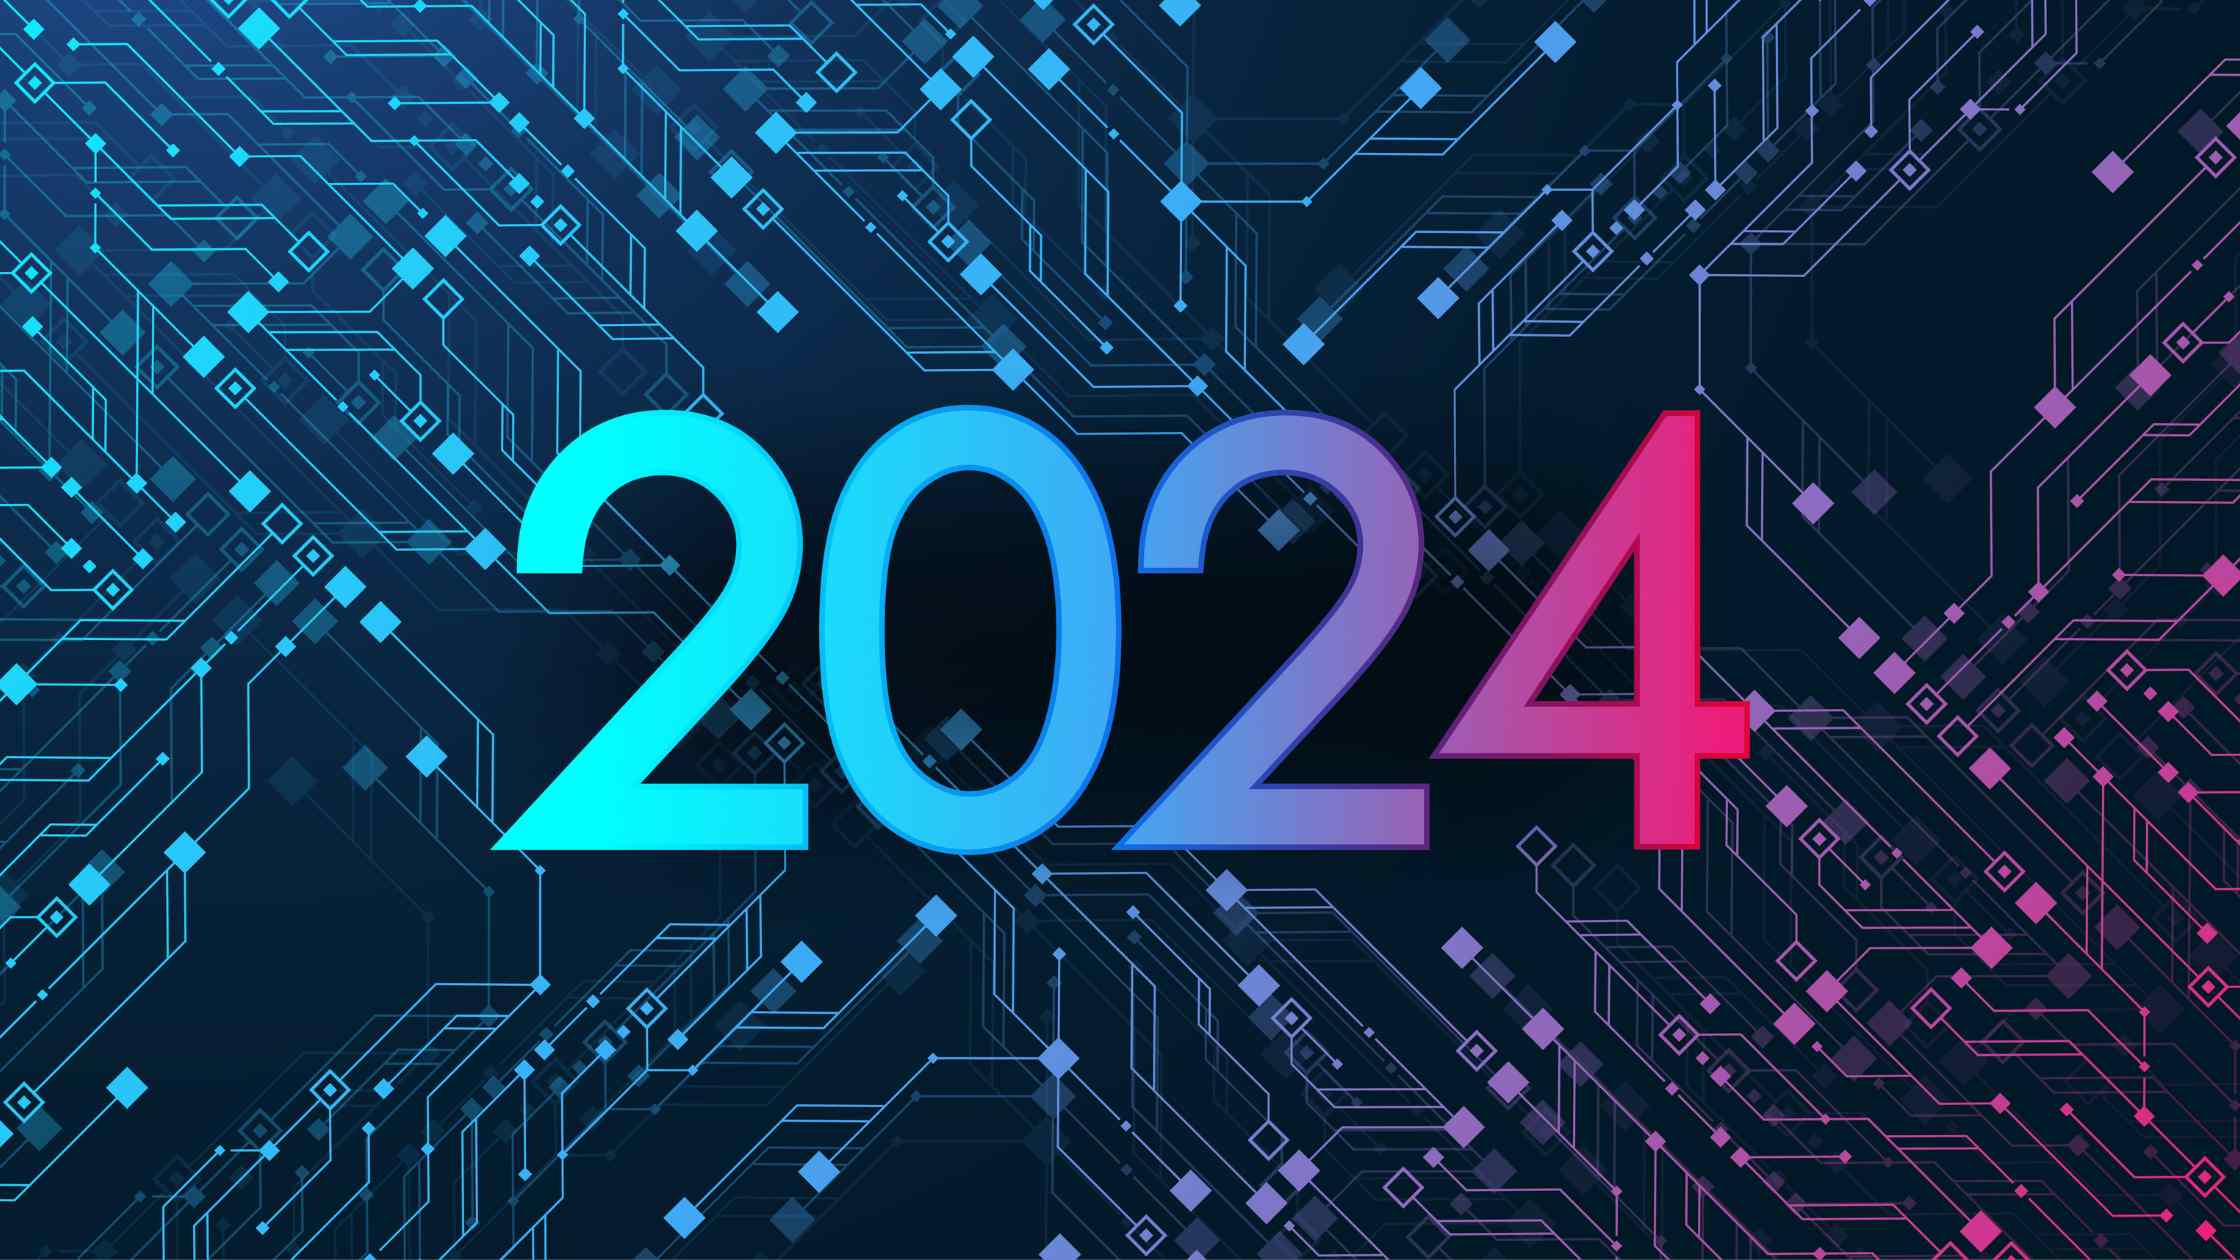 2024 on a digital background